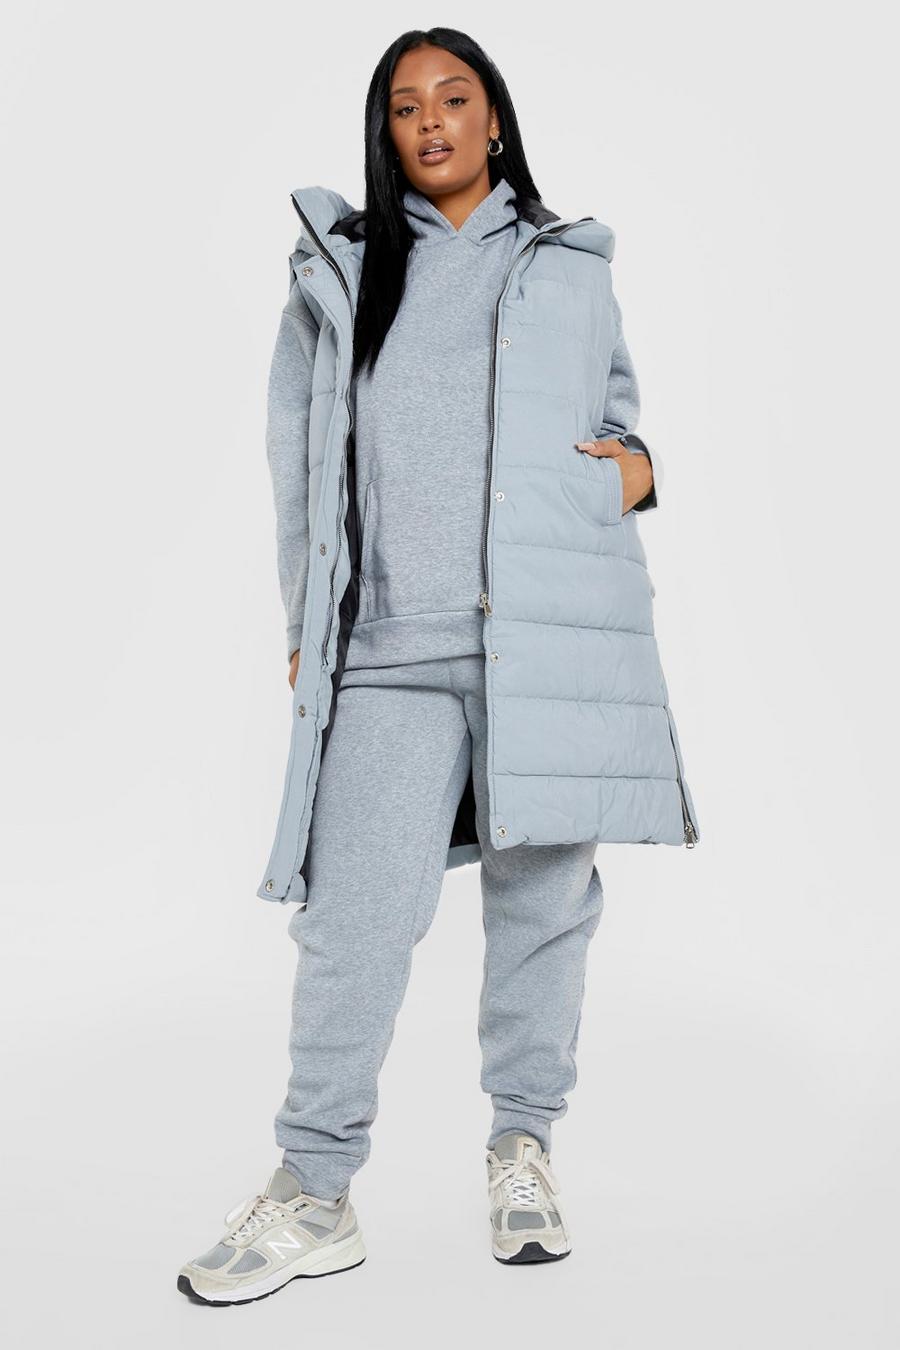 Womens Winter Coats,Womens Plus Size Winter Coat with Faux Fur Hood Lined Parkas 